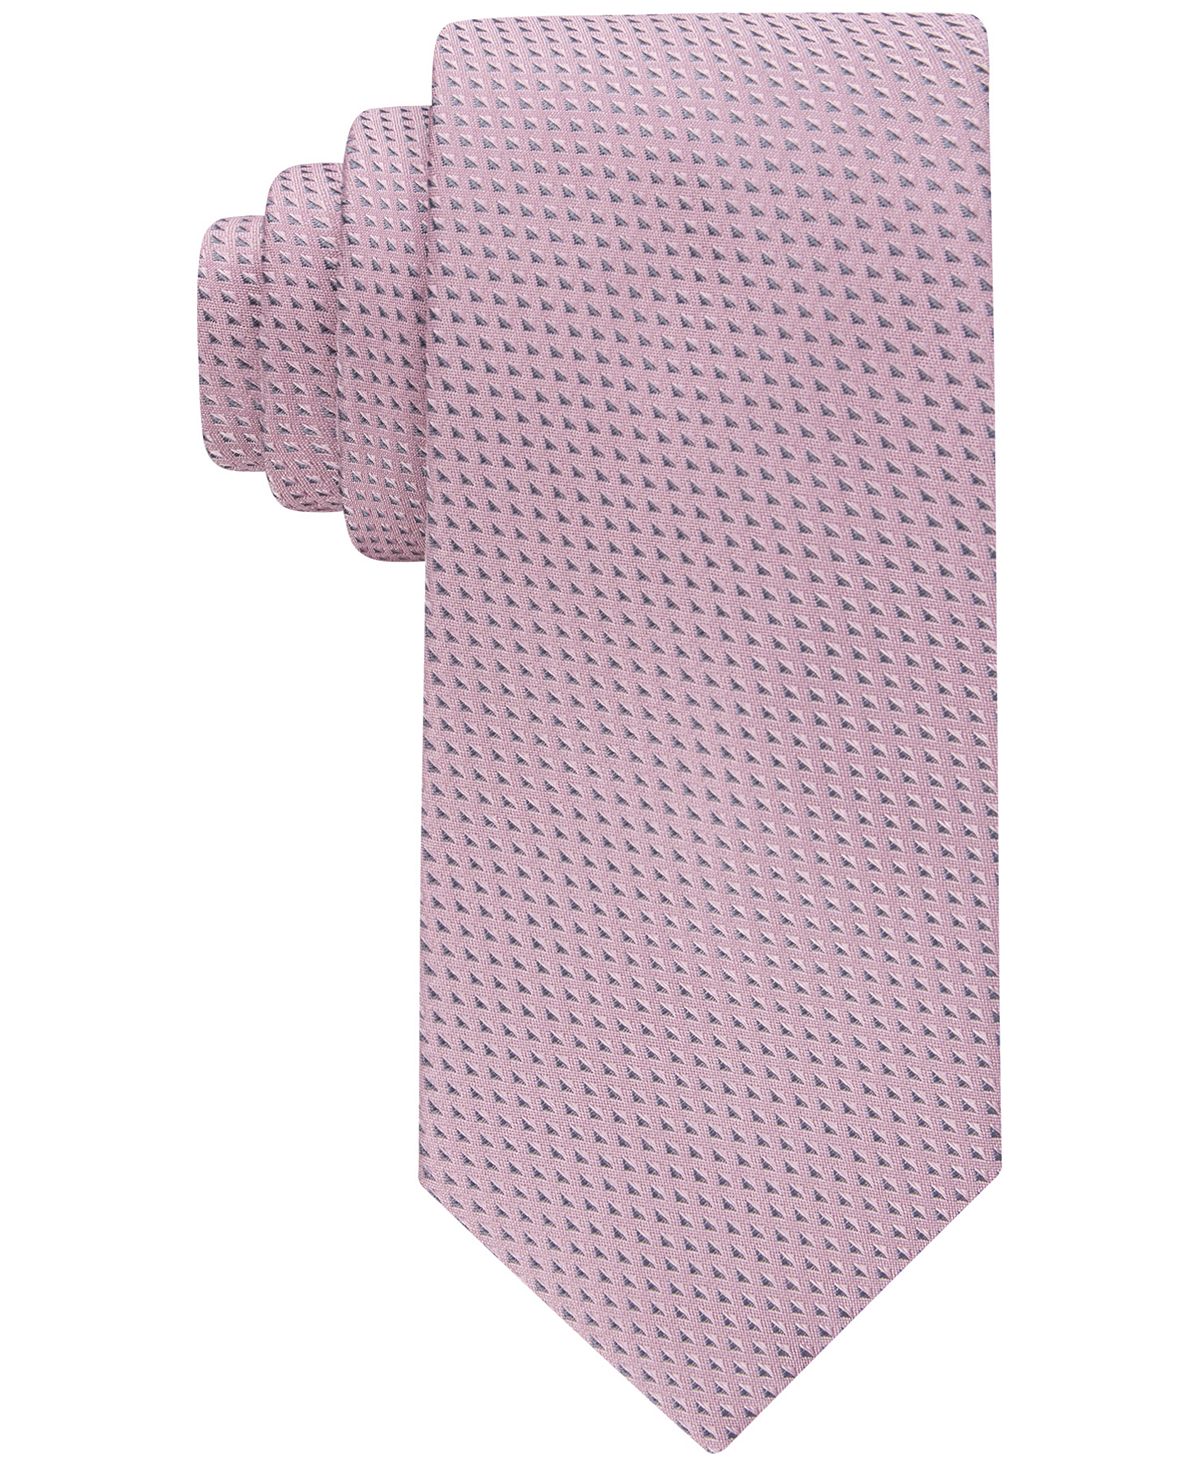 Мужской галстук с микробриллиантами Calvin Klein темный мужской галстук calvin klein 2108